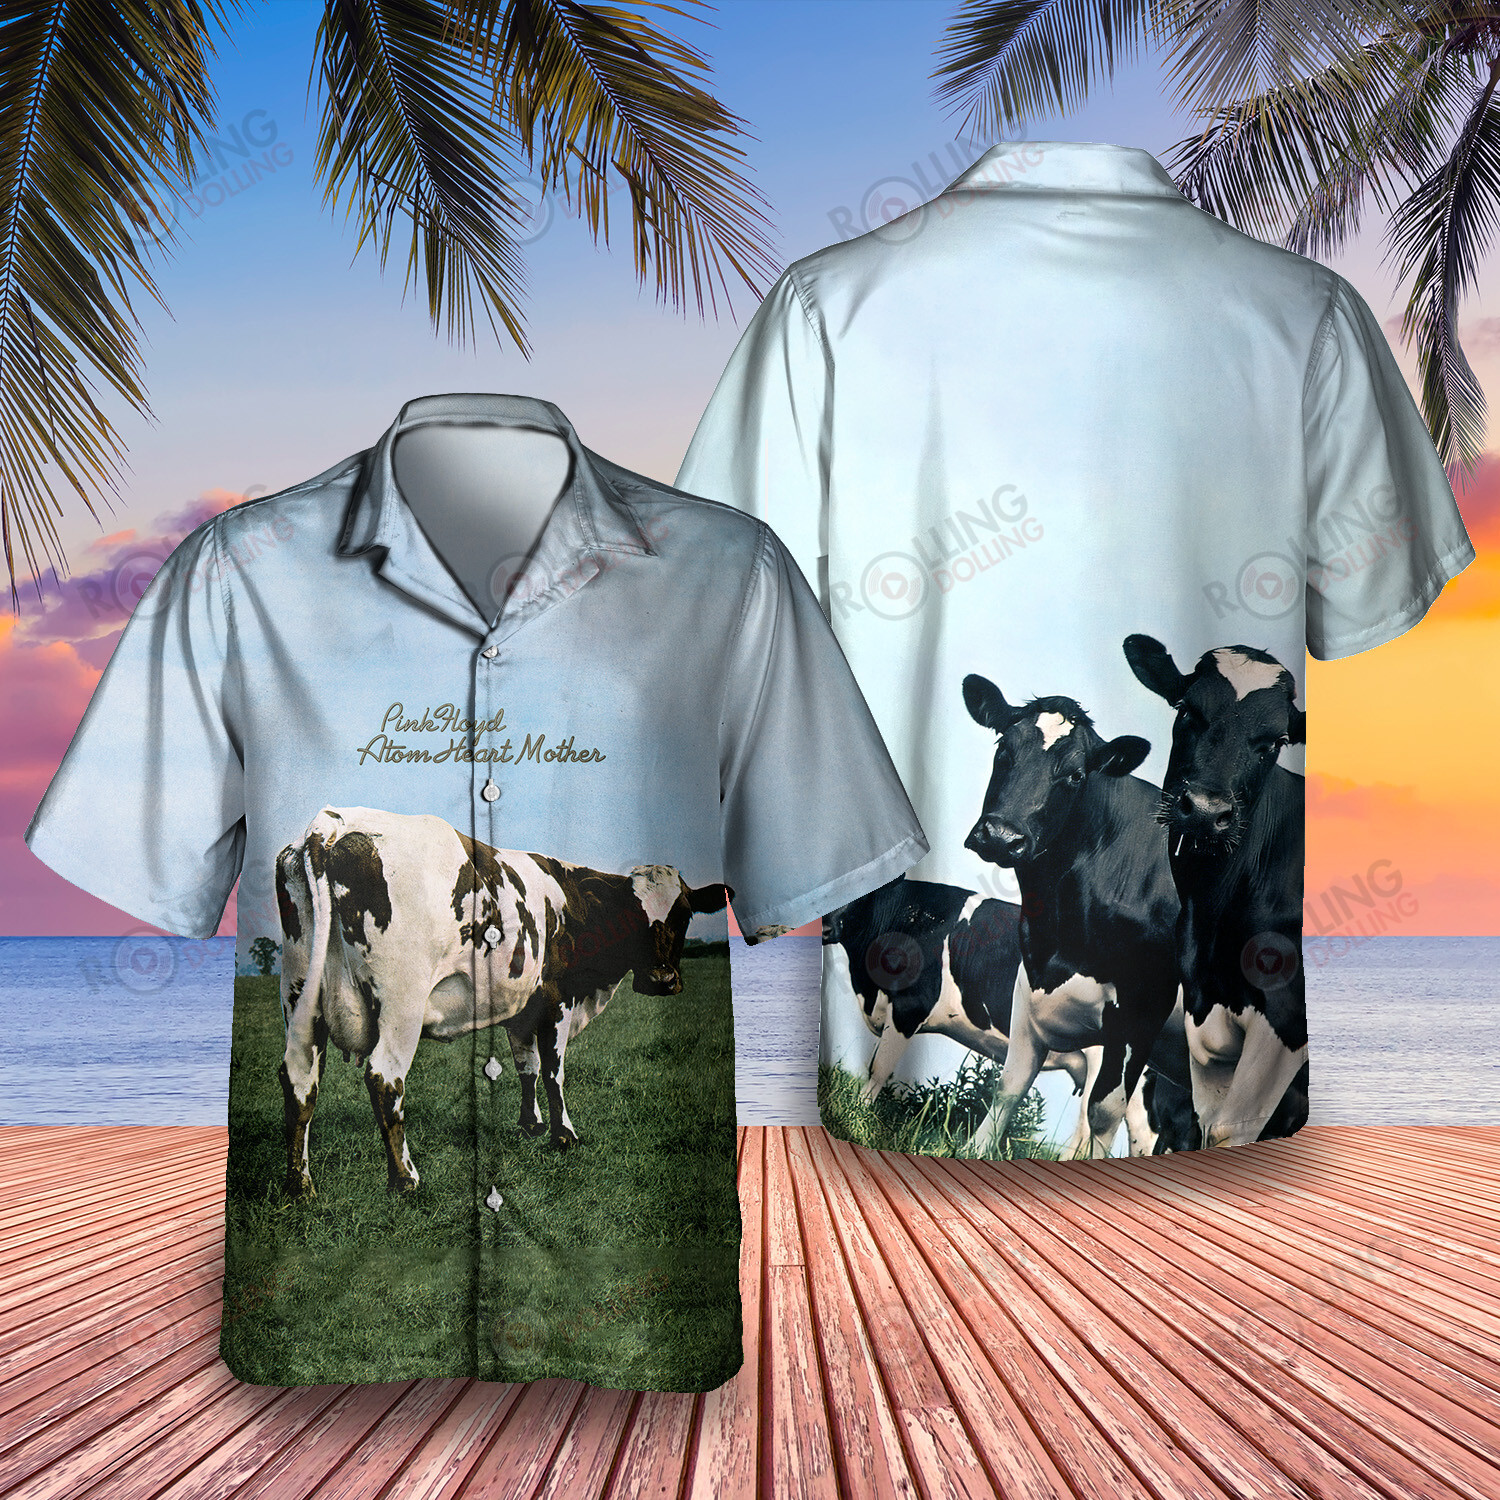 Regardless of their style, you will feel comfortable wearing Hawaiian Shirt 44